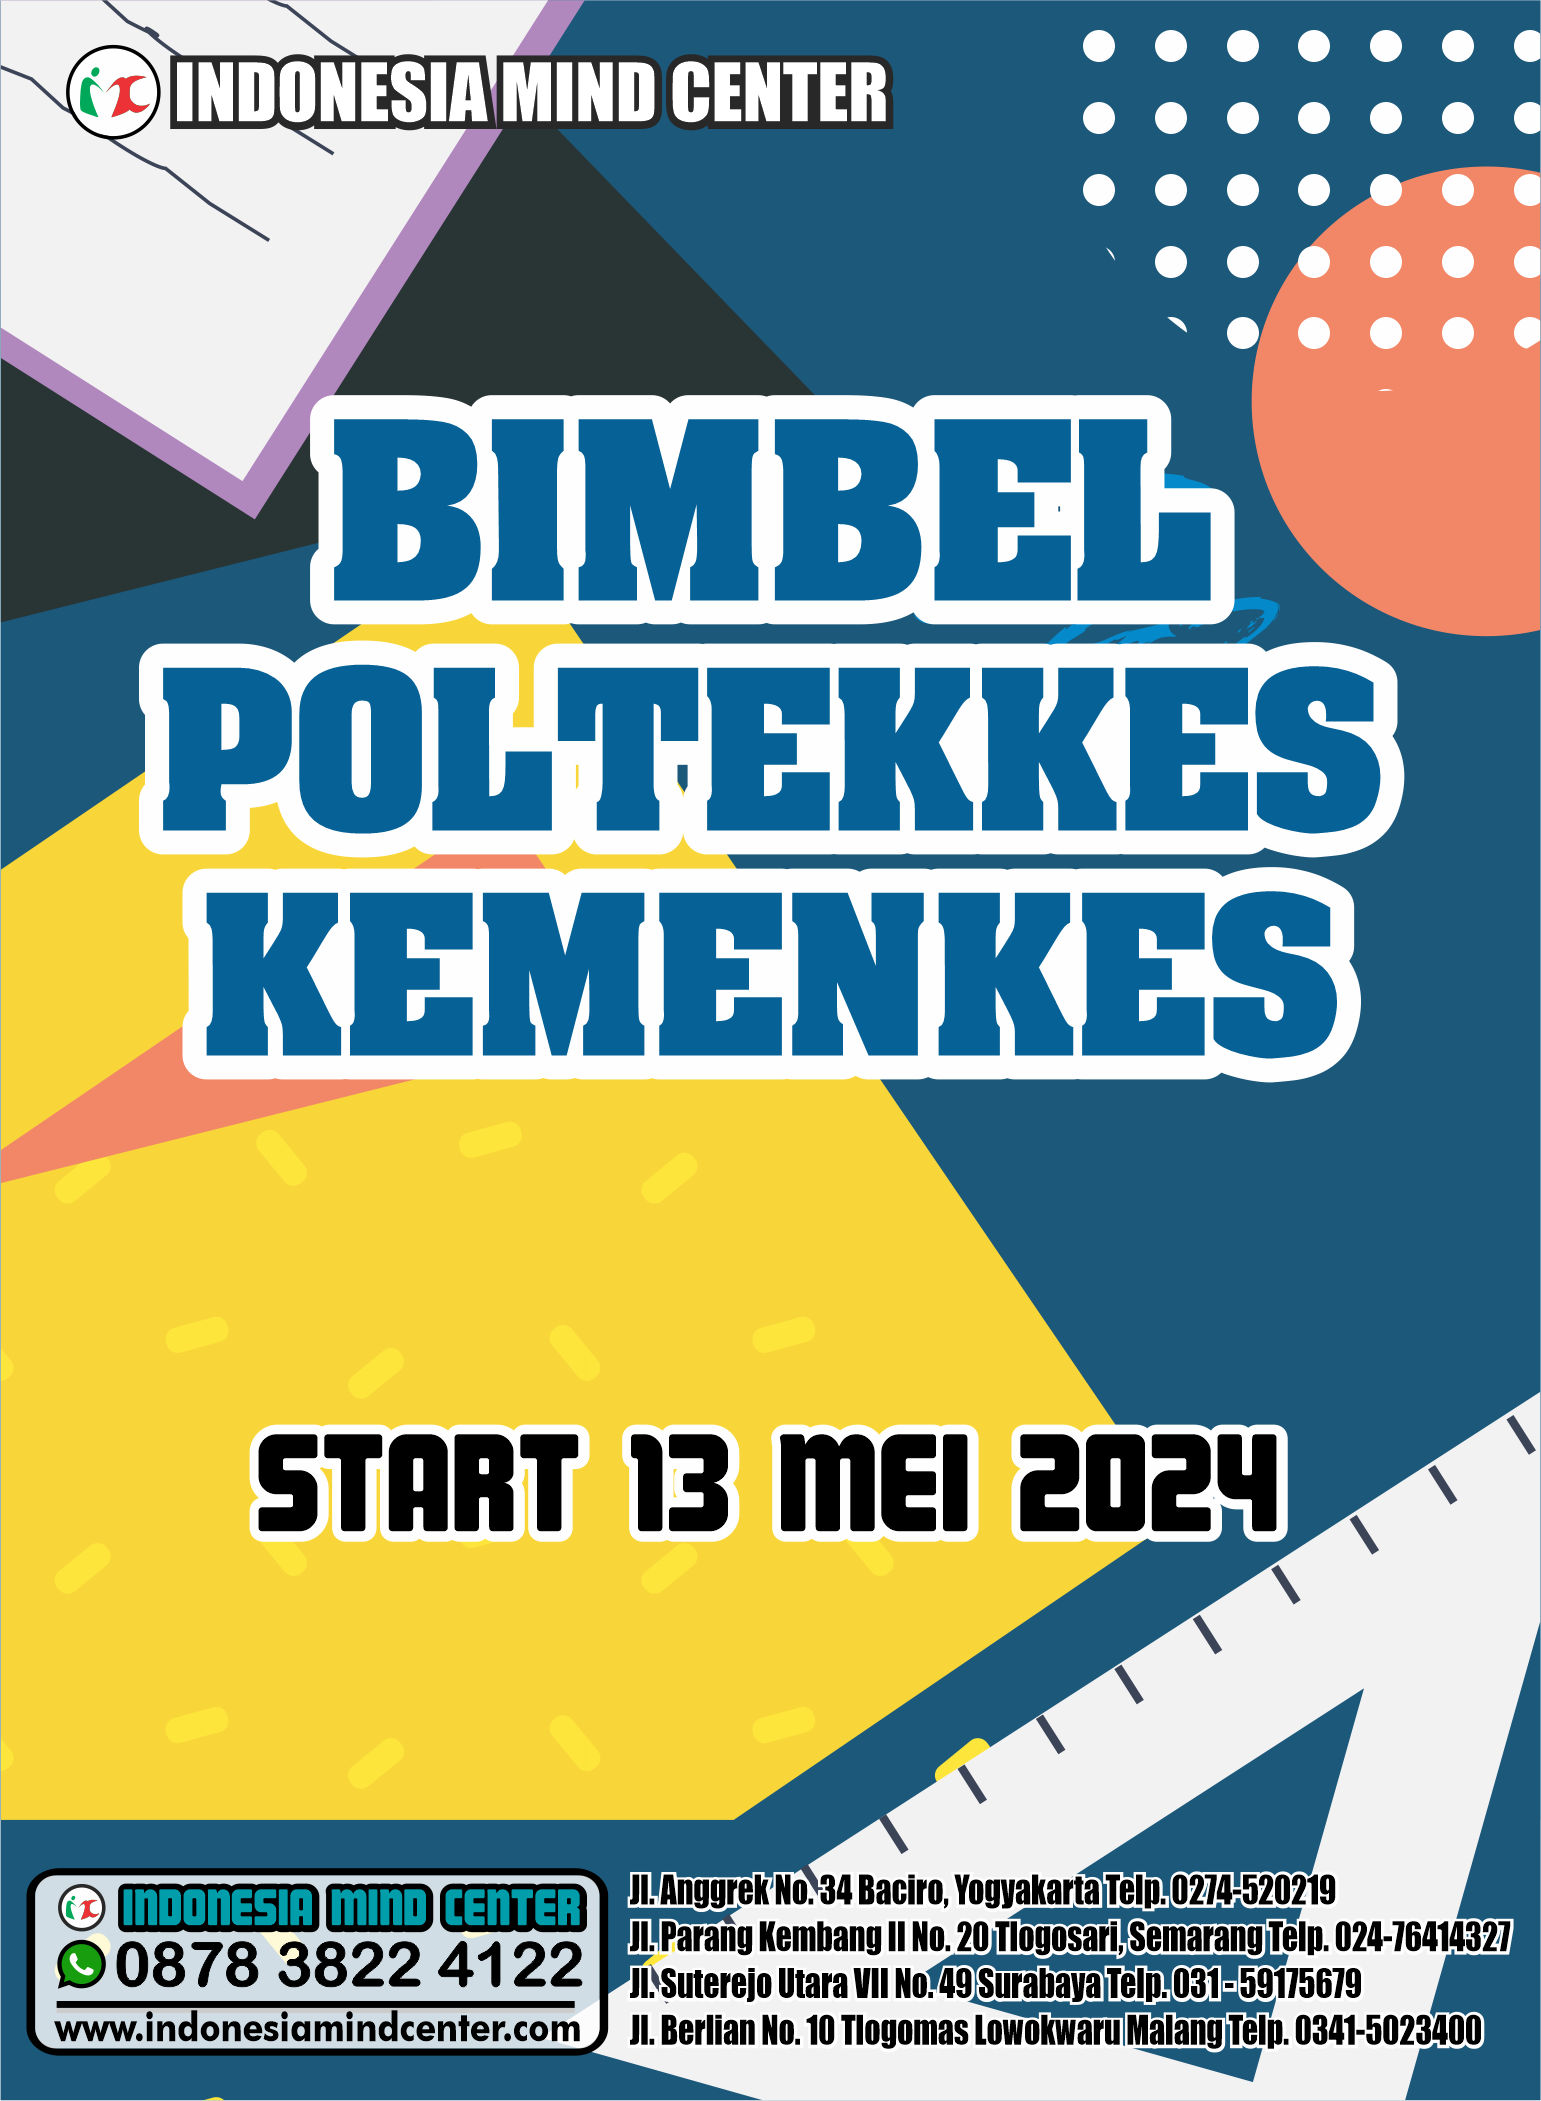 BIMBEL POLTEKKES KEMENKES START 13 MEI 2024